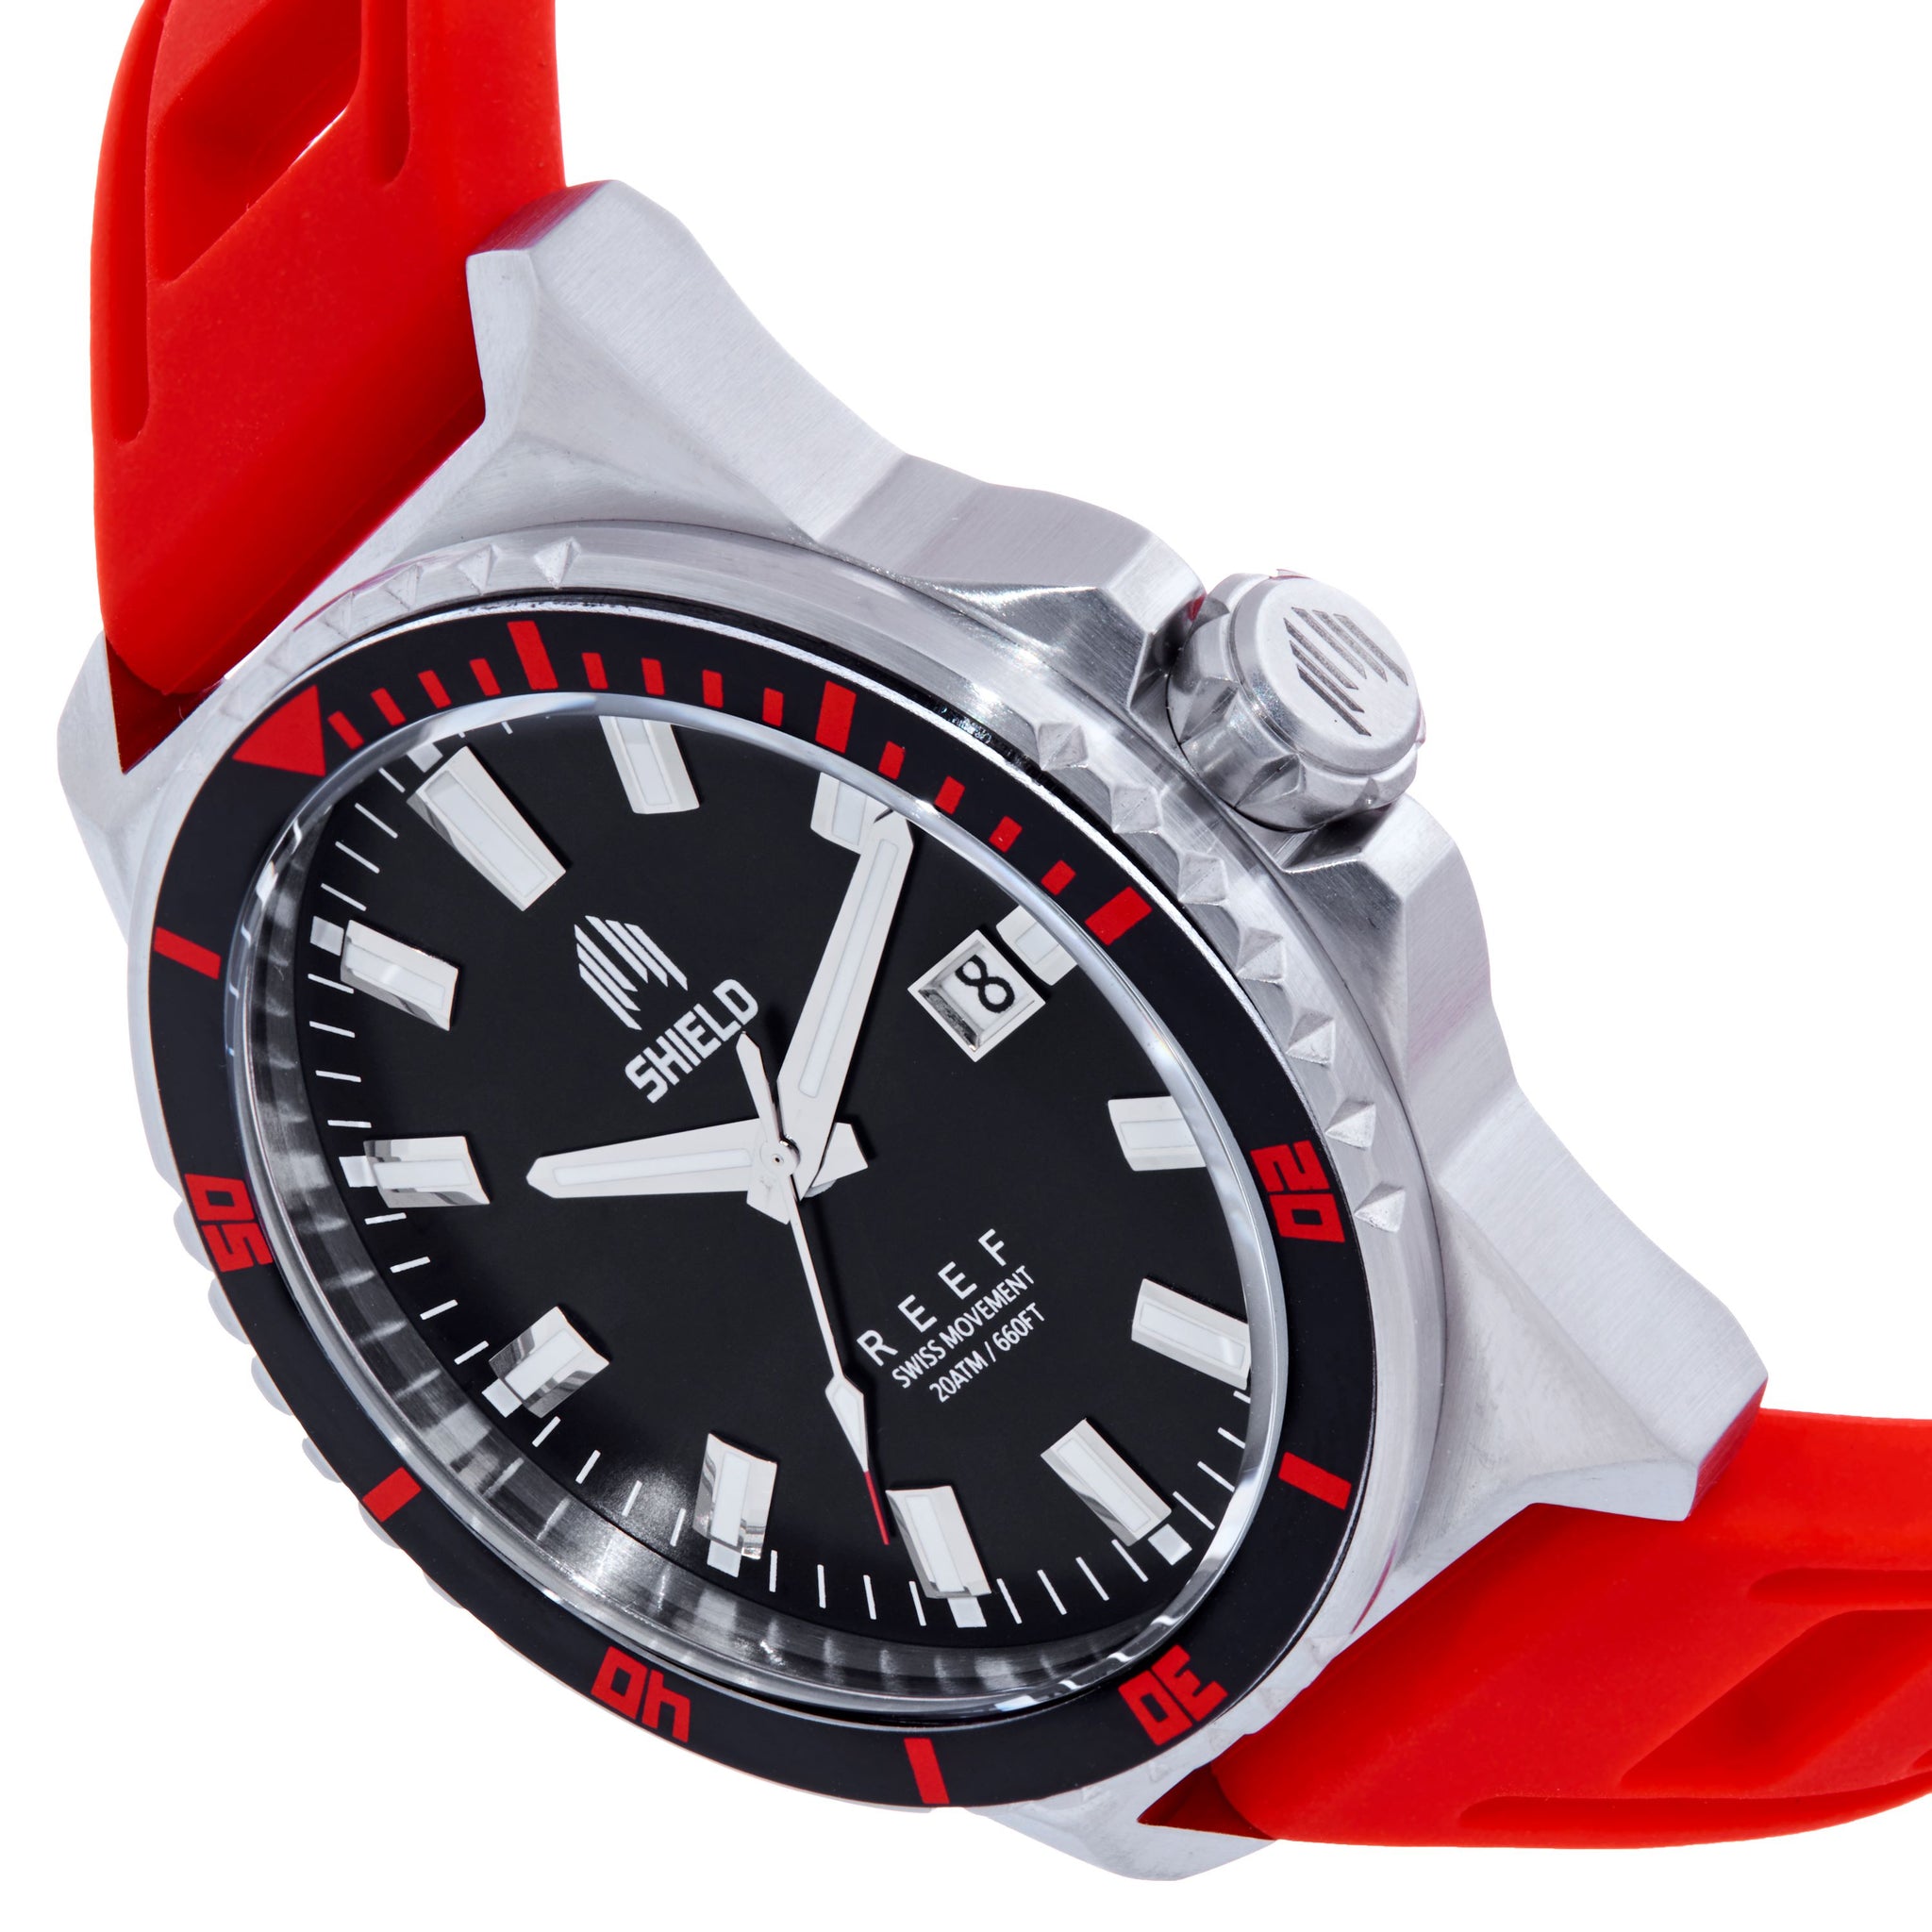 Shield Reef Strap Watch w/Date - Red - SLDSH119-2